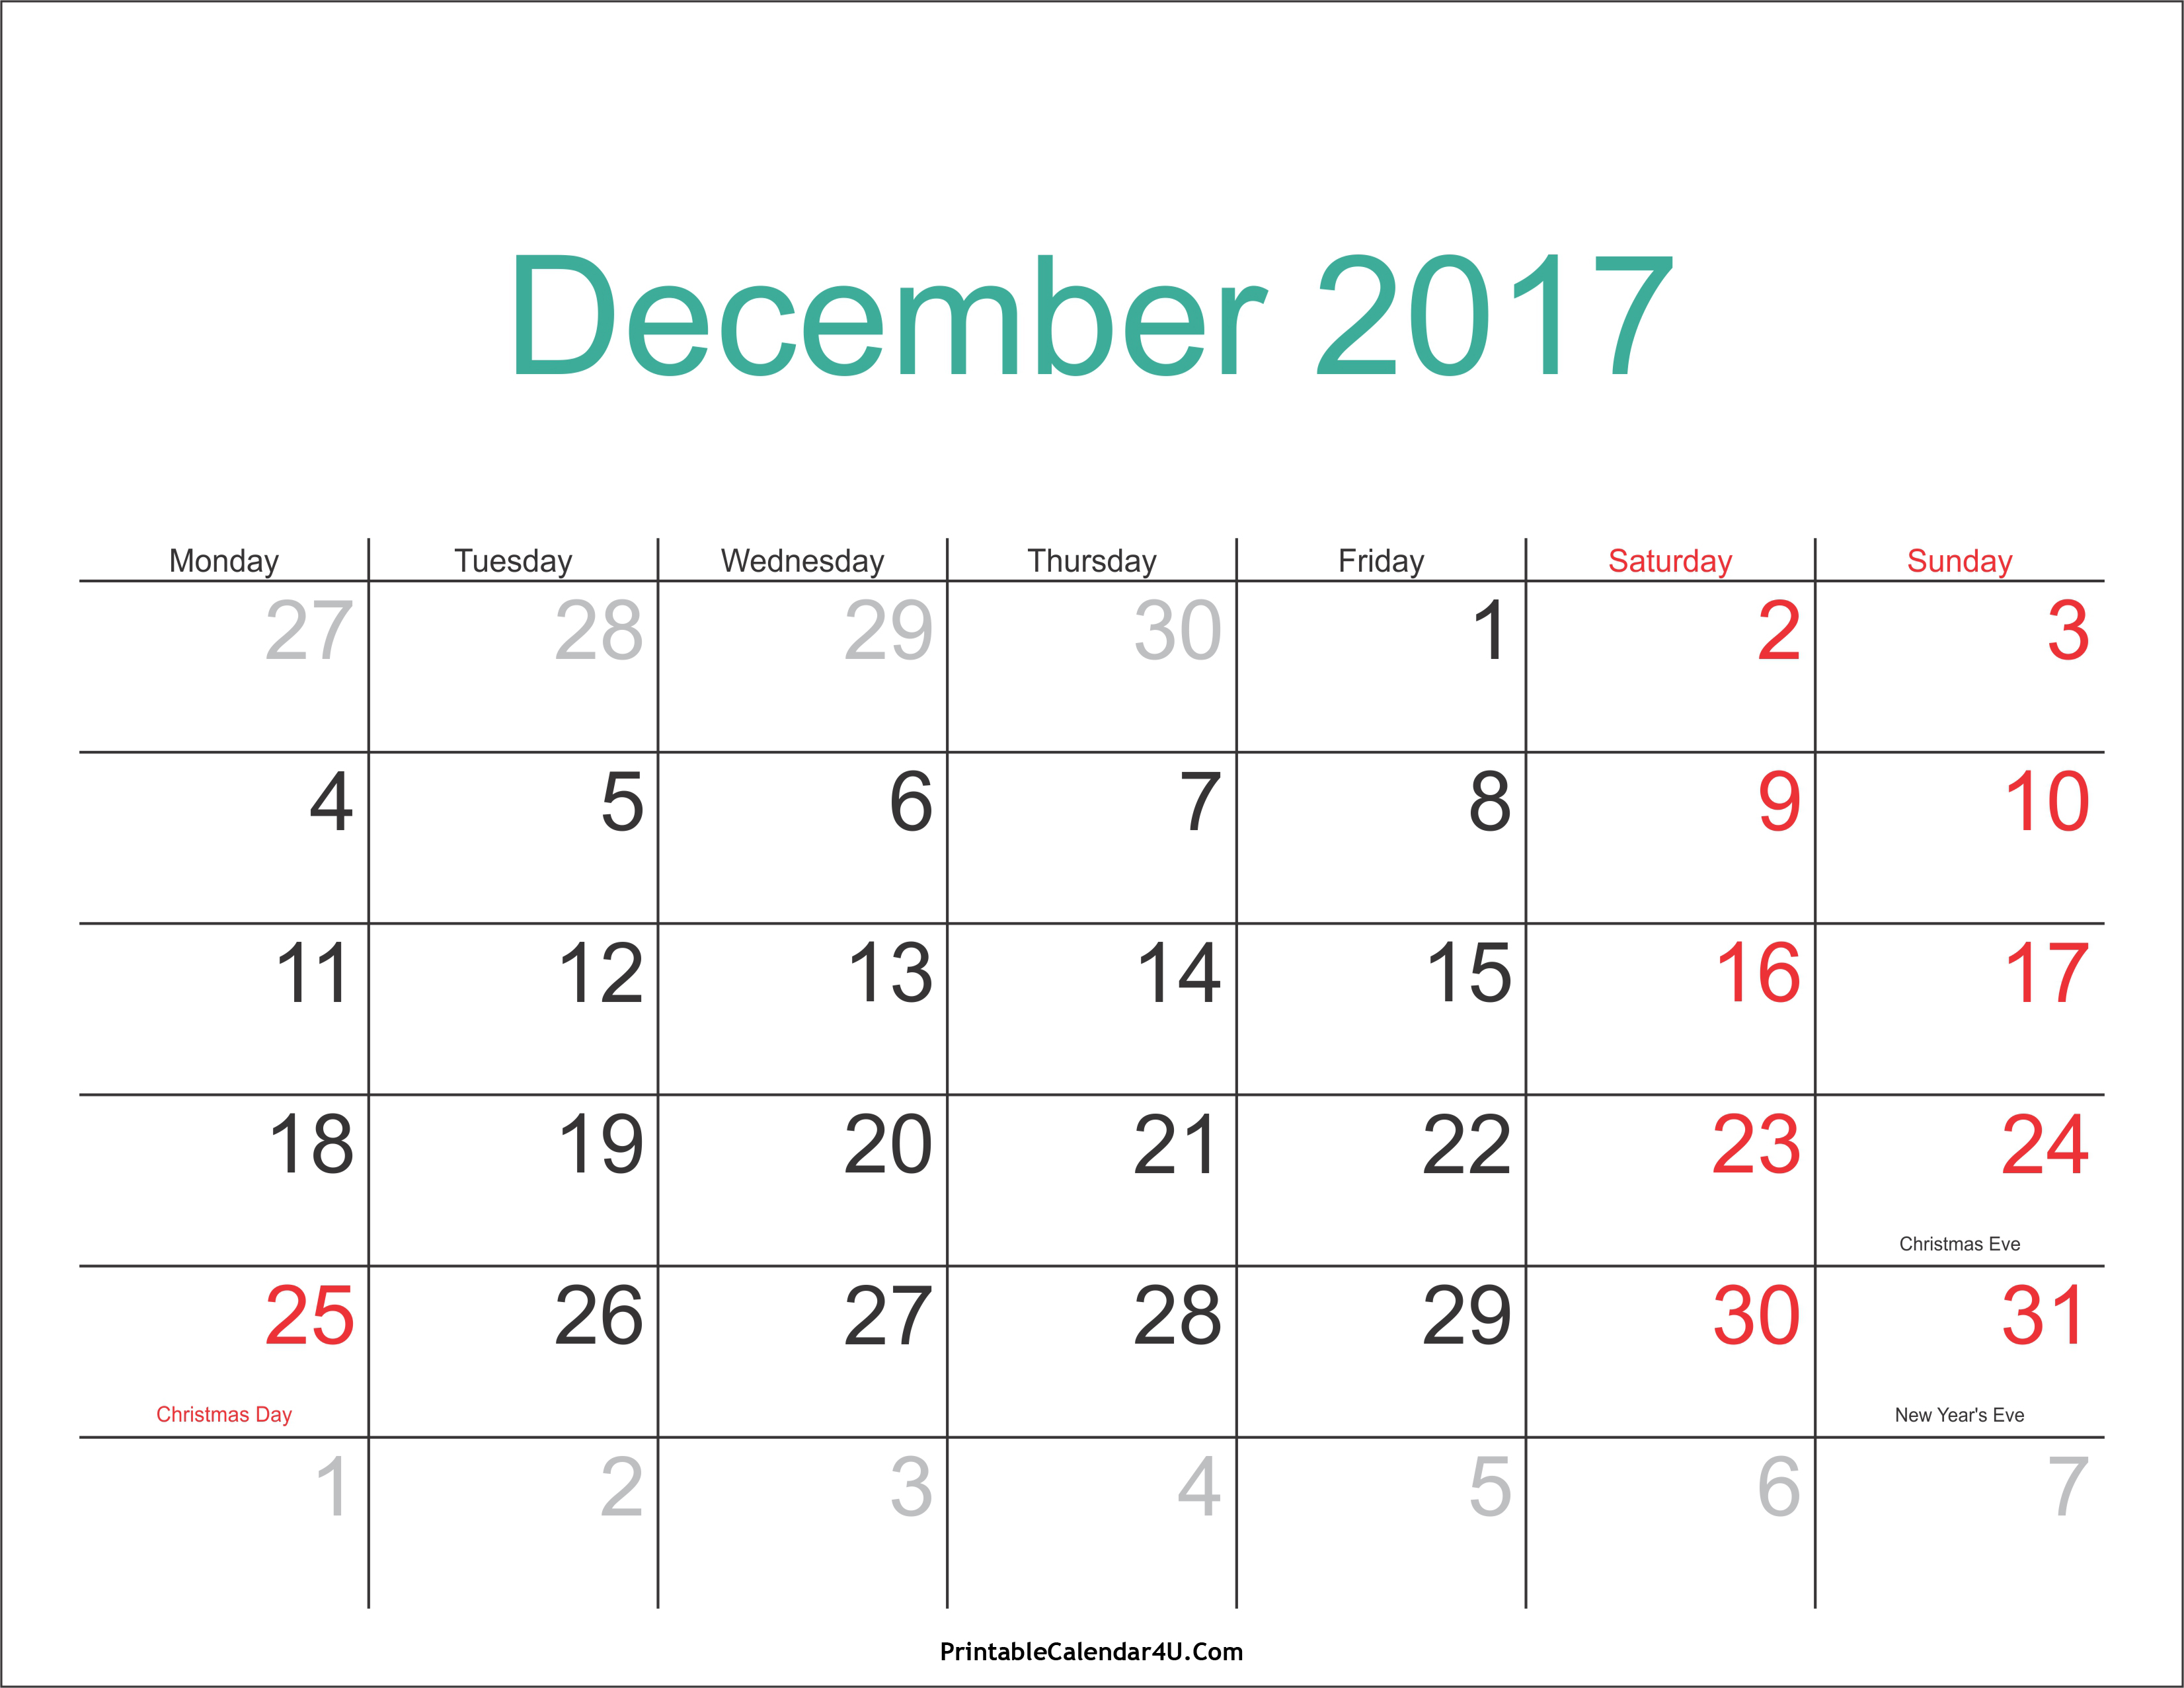 December 2017 Calendar Printable with Holidays PDF and 